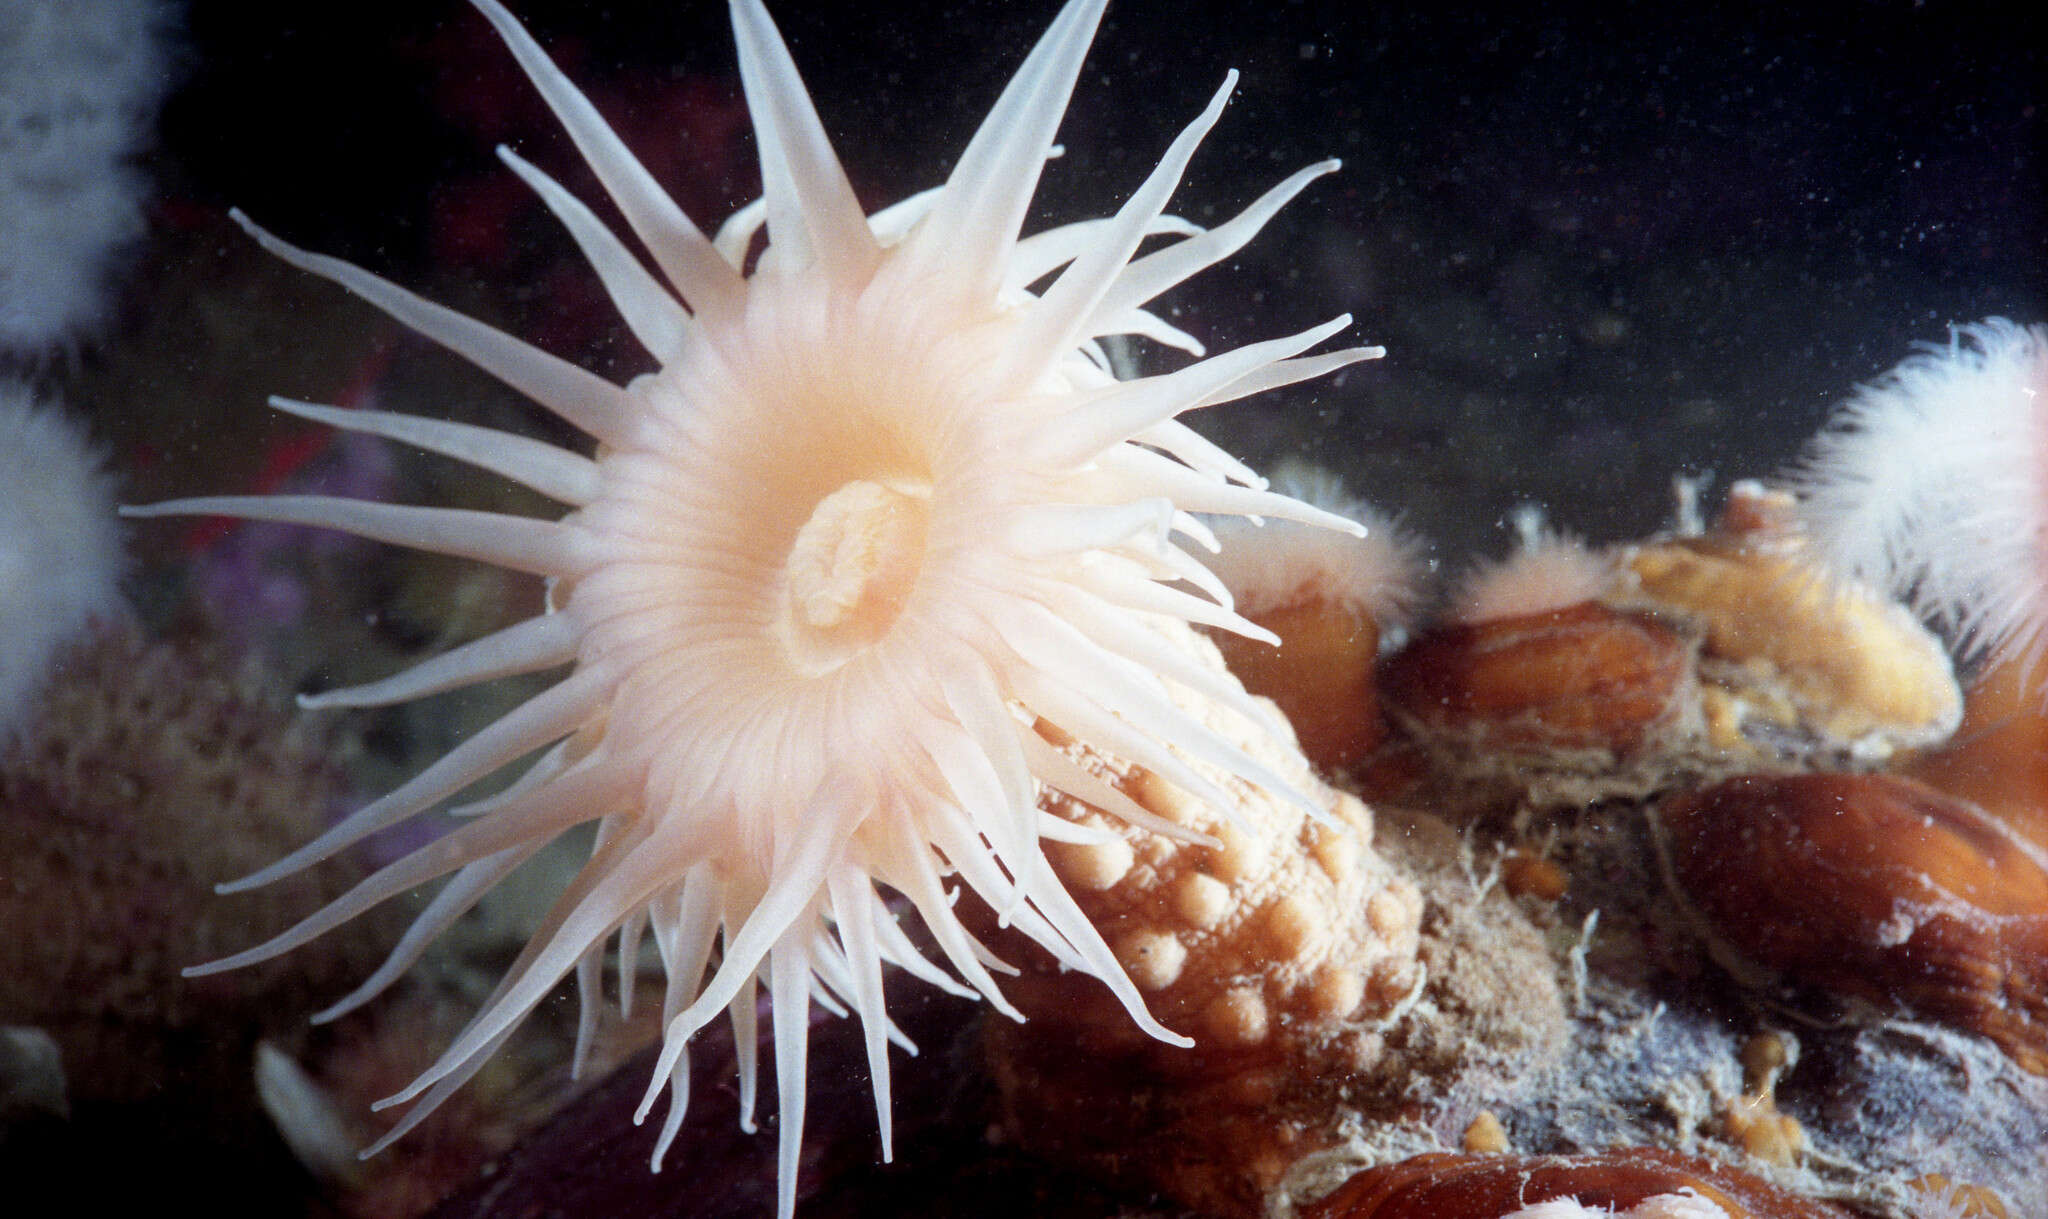 Image of knobby anemone